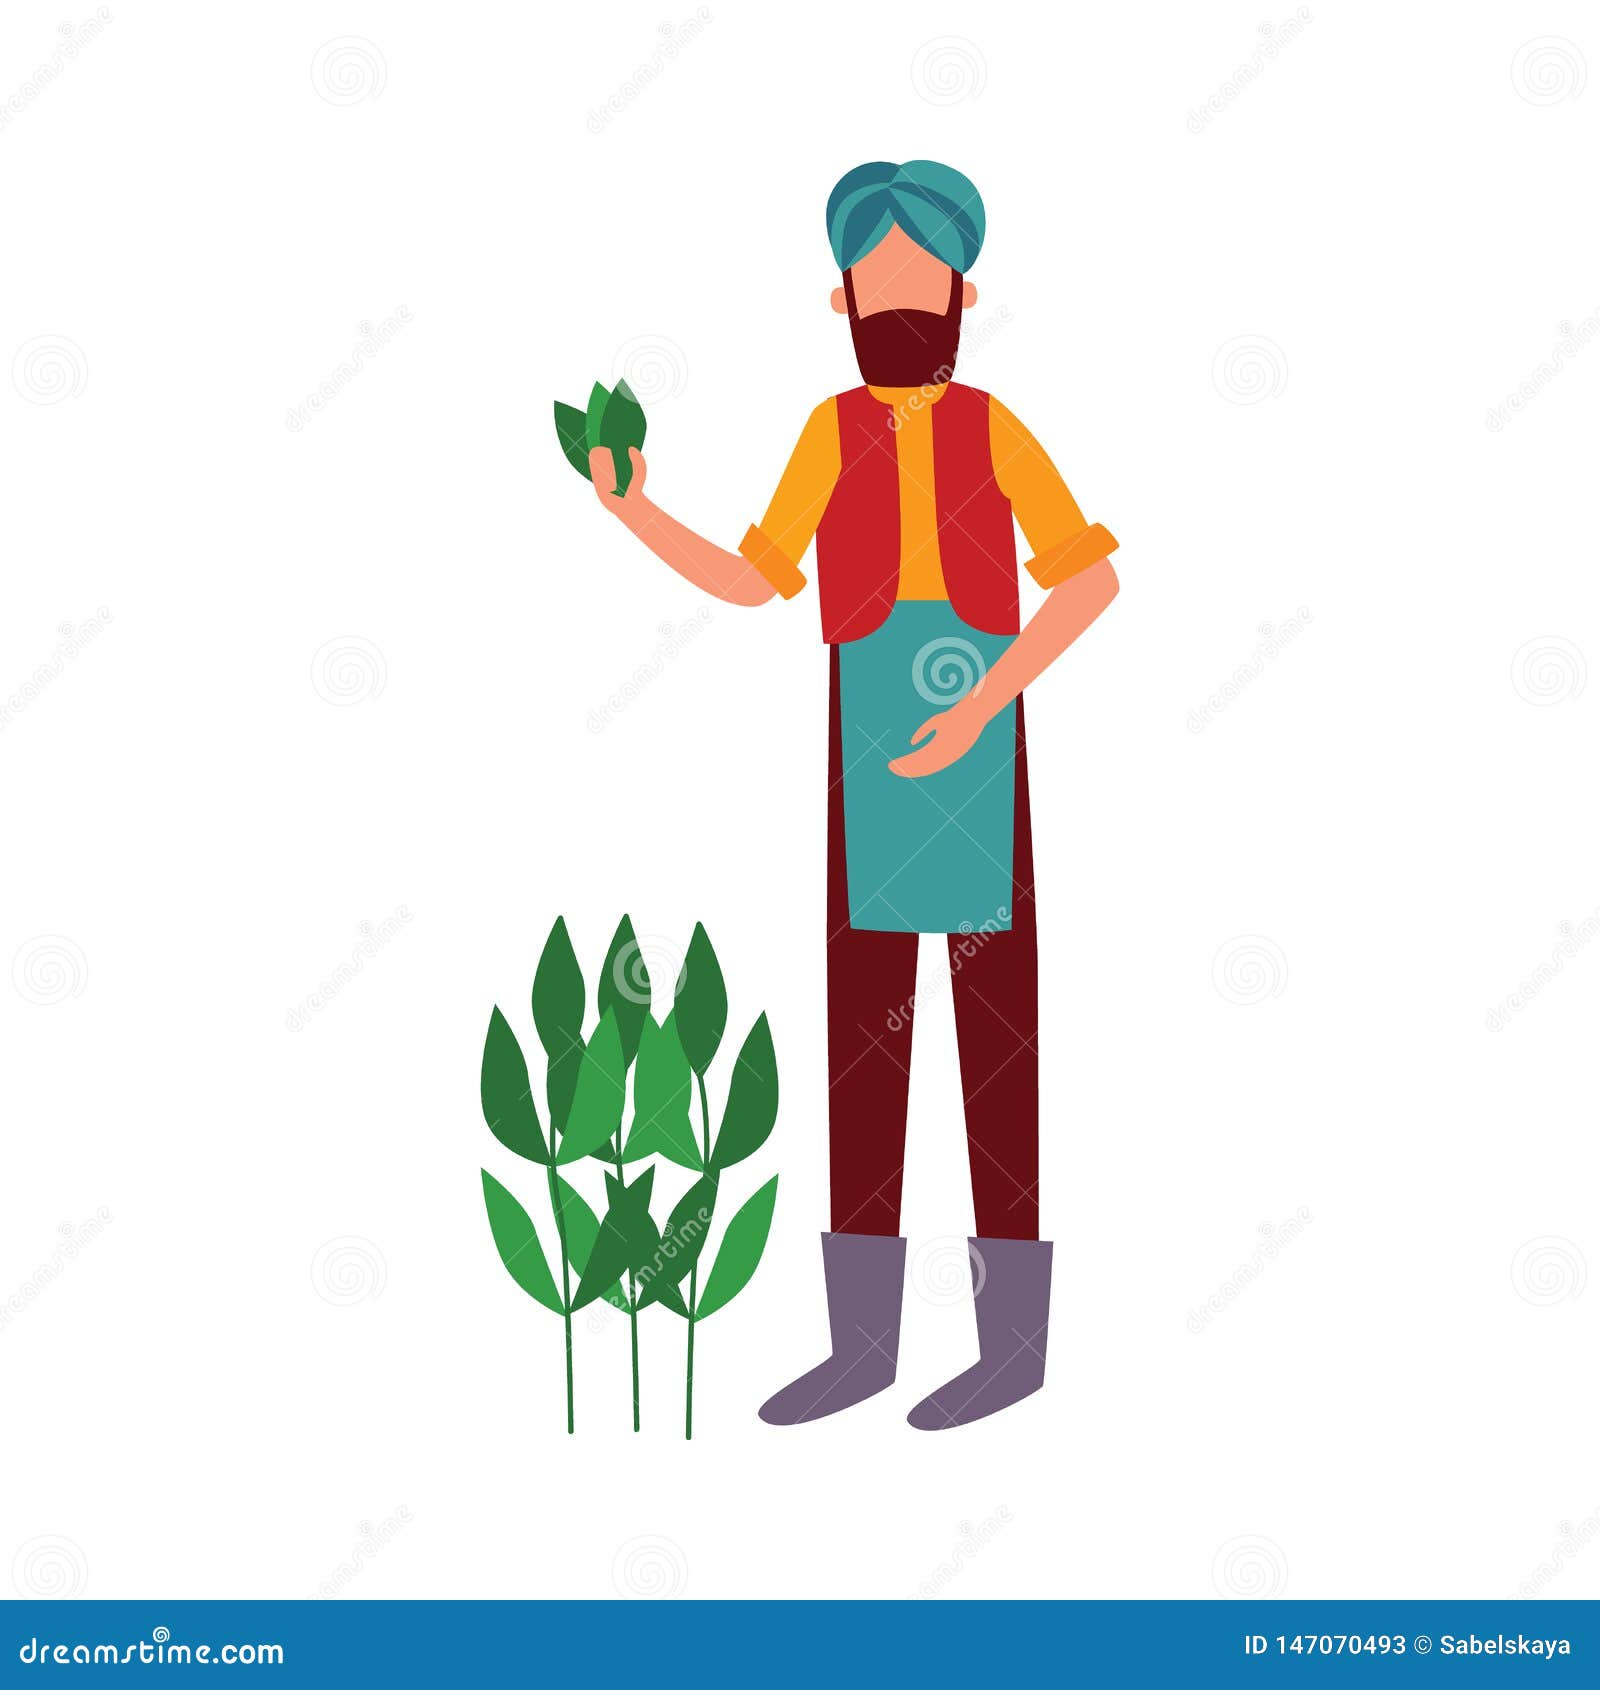 indian farmer cartoon